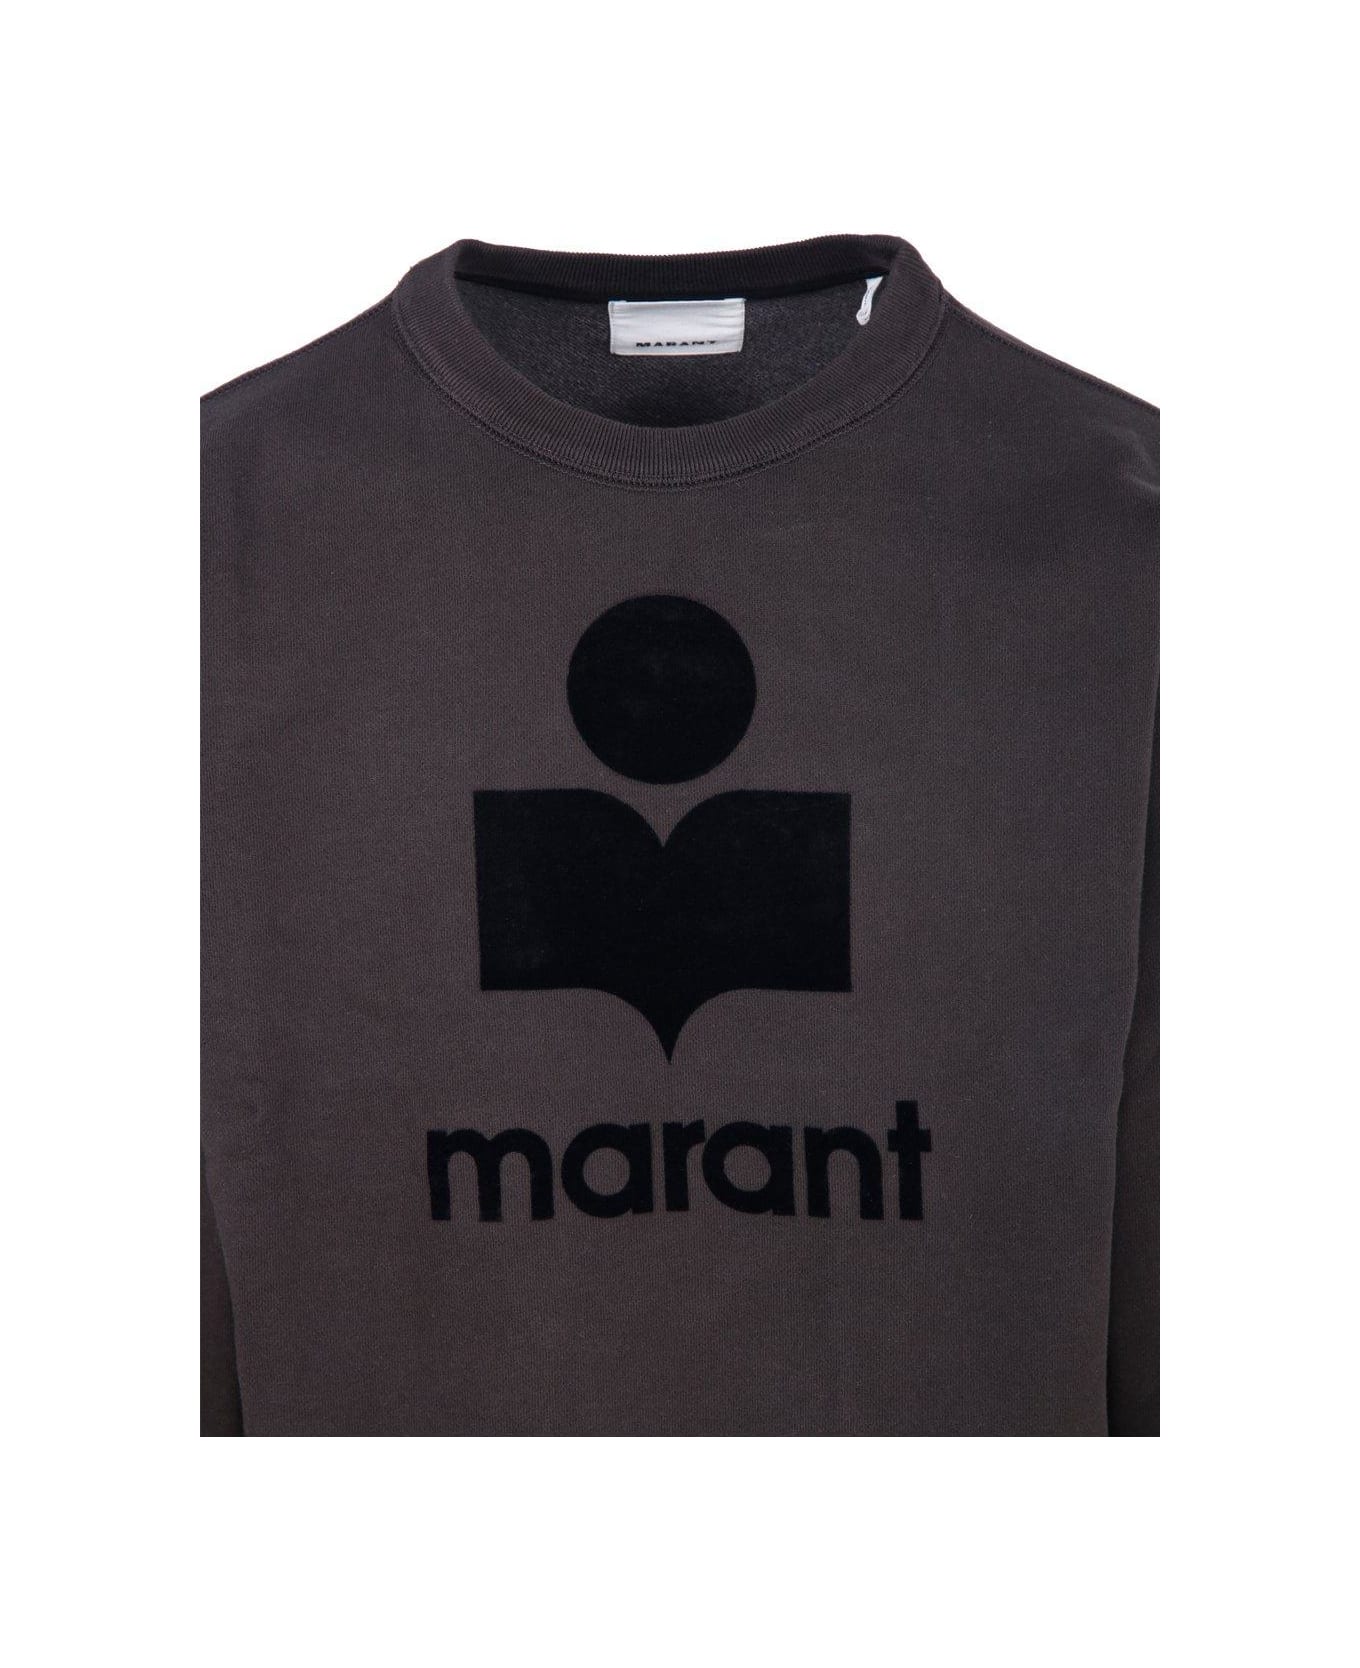 Isabel Marant Logo Printed Crewneck Sweatshirt - Black